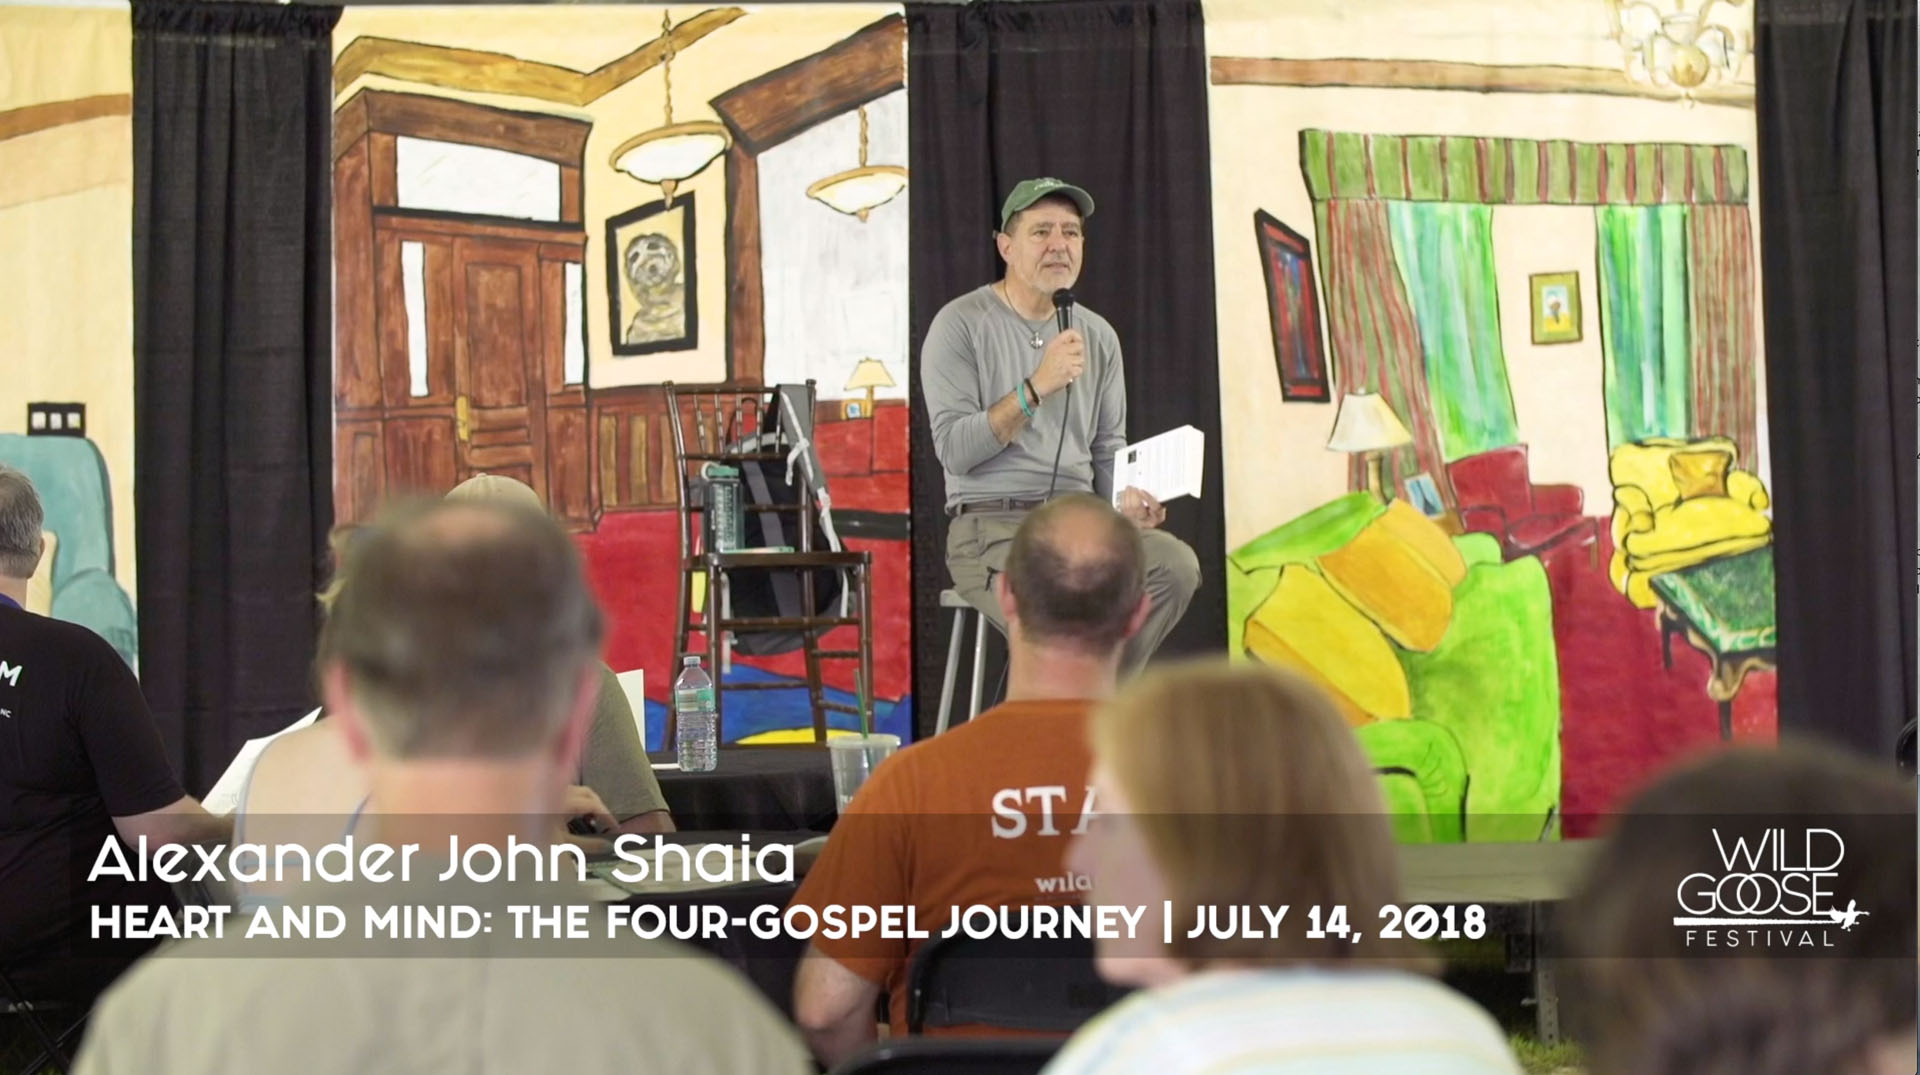 Alexander John Shaia - "Heart and Mind: The Four-Gospel Journey for Radical Transformation"